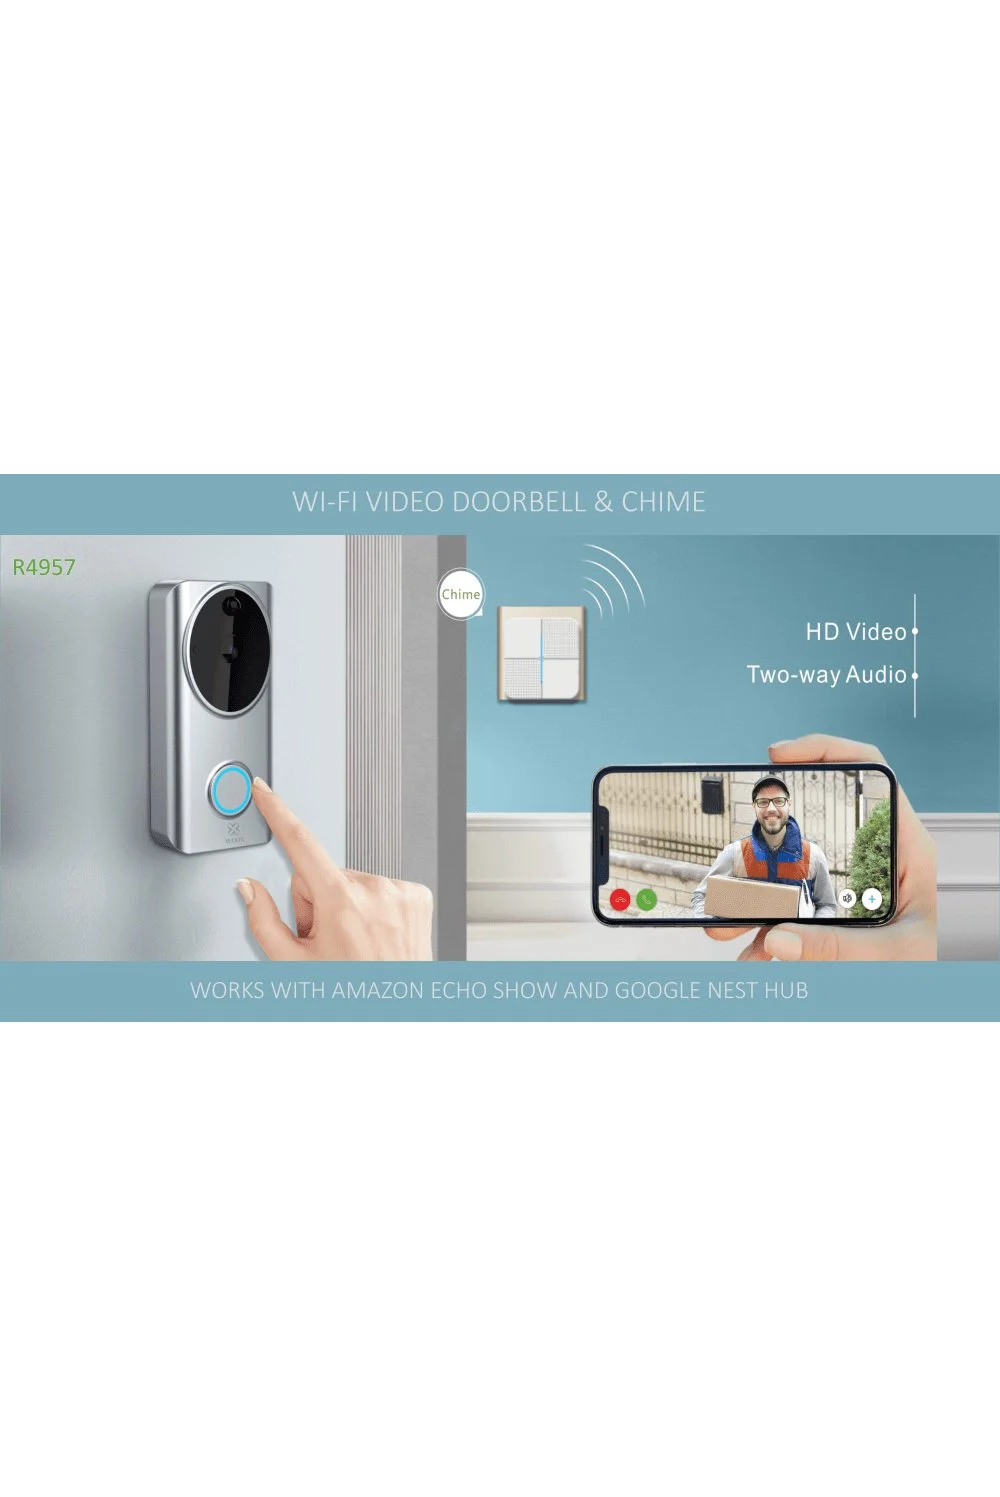 Woox видеозвънец с двупосочно аудио Doorbell - R4957 - Smart WiFi Video Doorbell and Chime - image 4